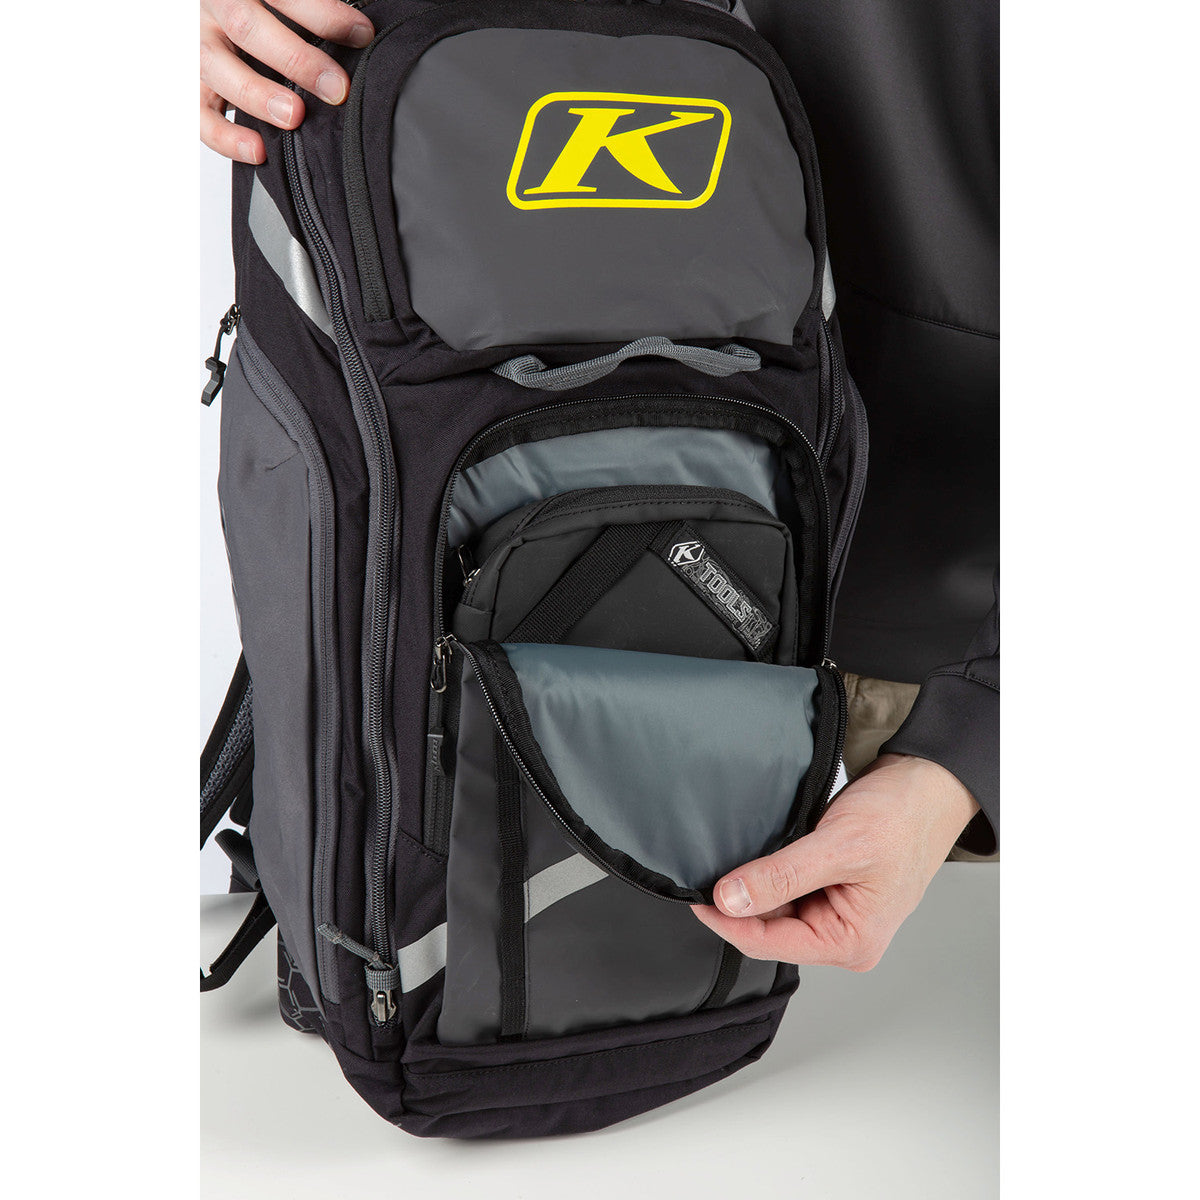 Klim Team Gear Bag Large Luggage Cargo Duffle Pack - Black -  3313-004-000-000